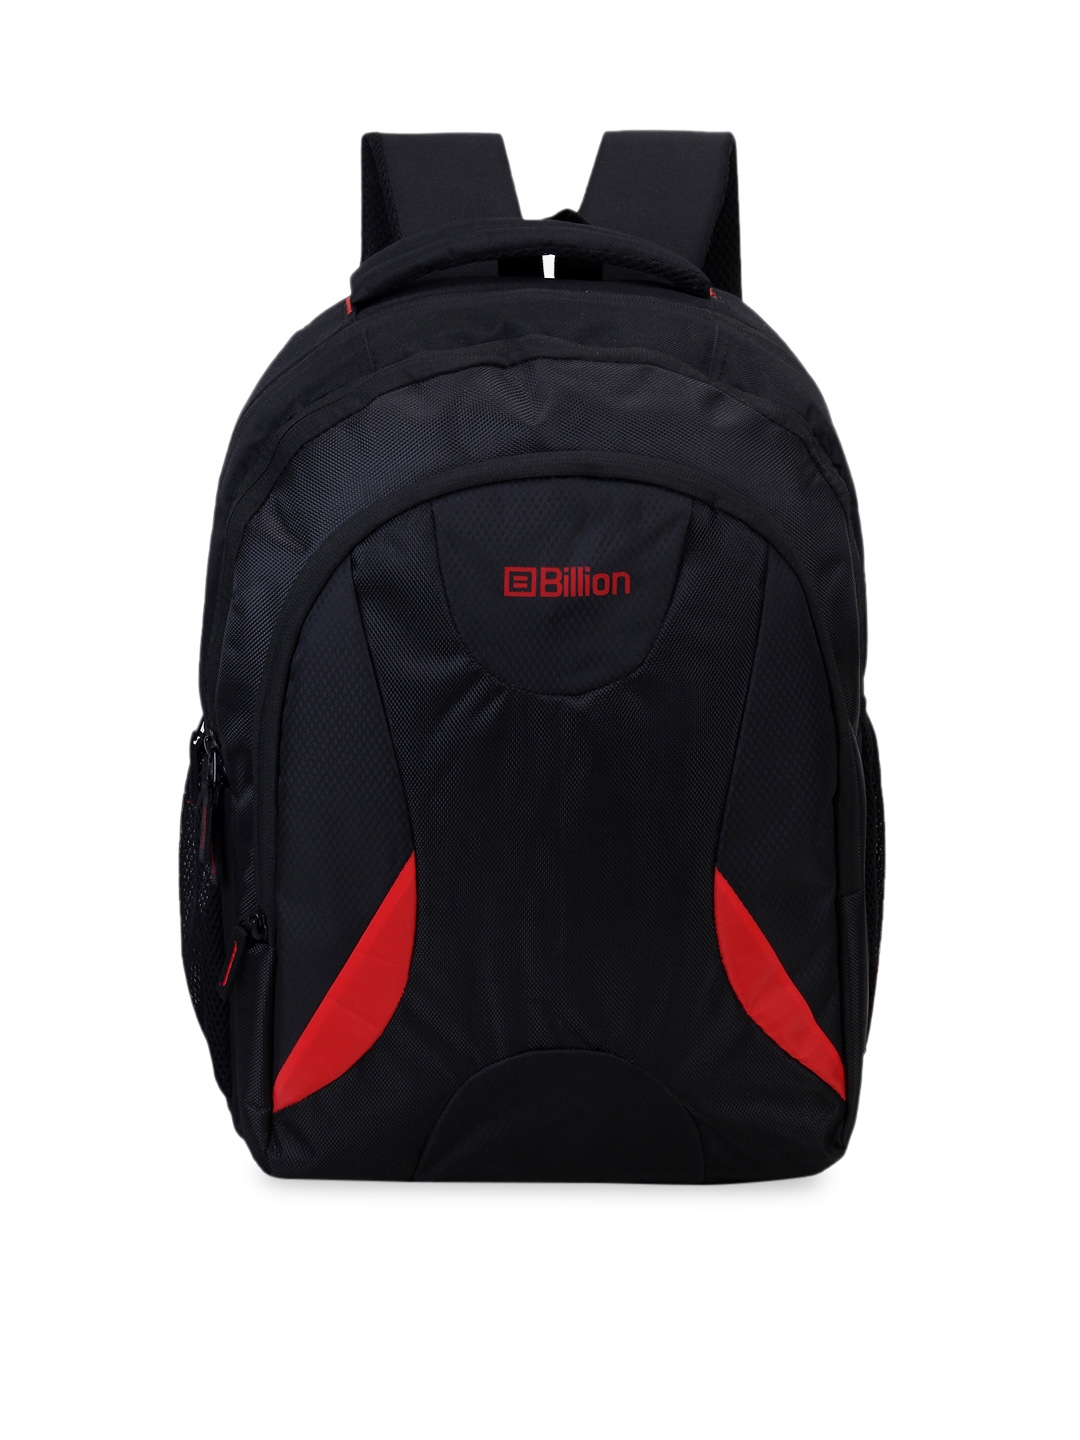 Billion Unisex Black   Red Textured Backpack